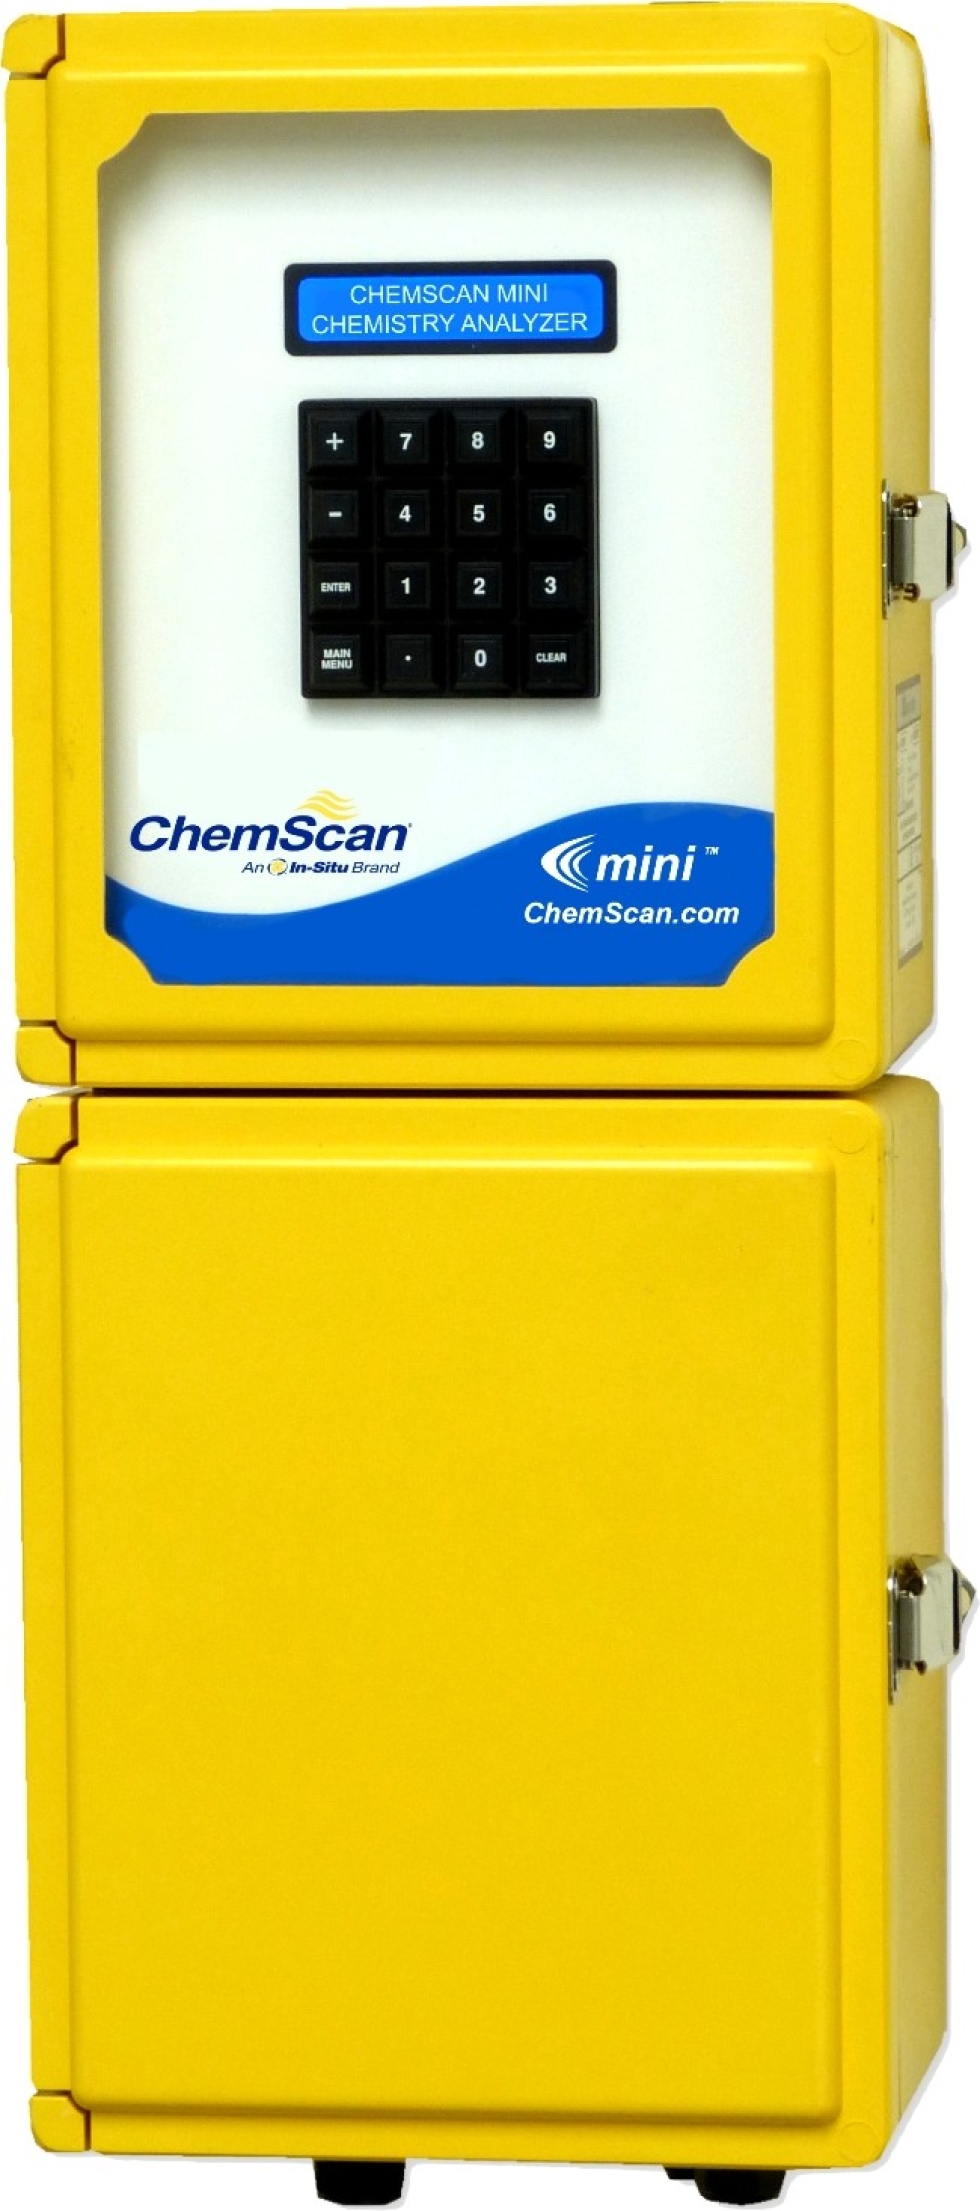 ChemScan mini Mn (Manganese Analyzer)